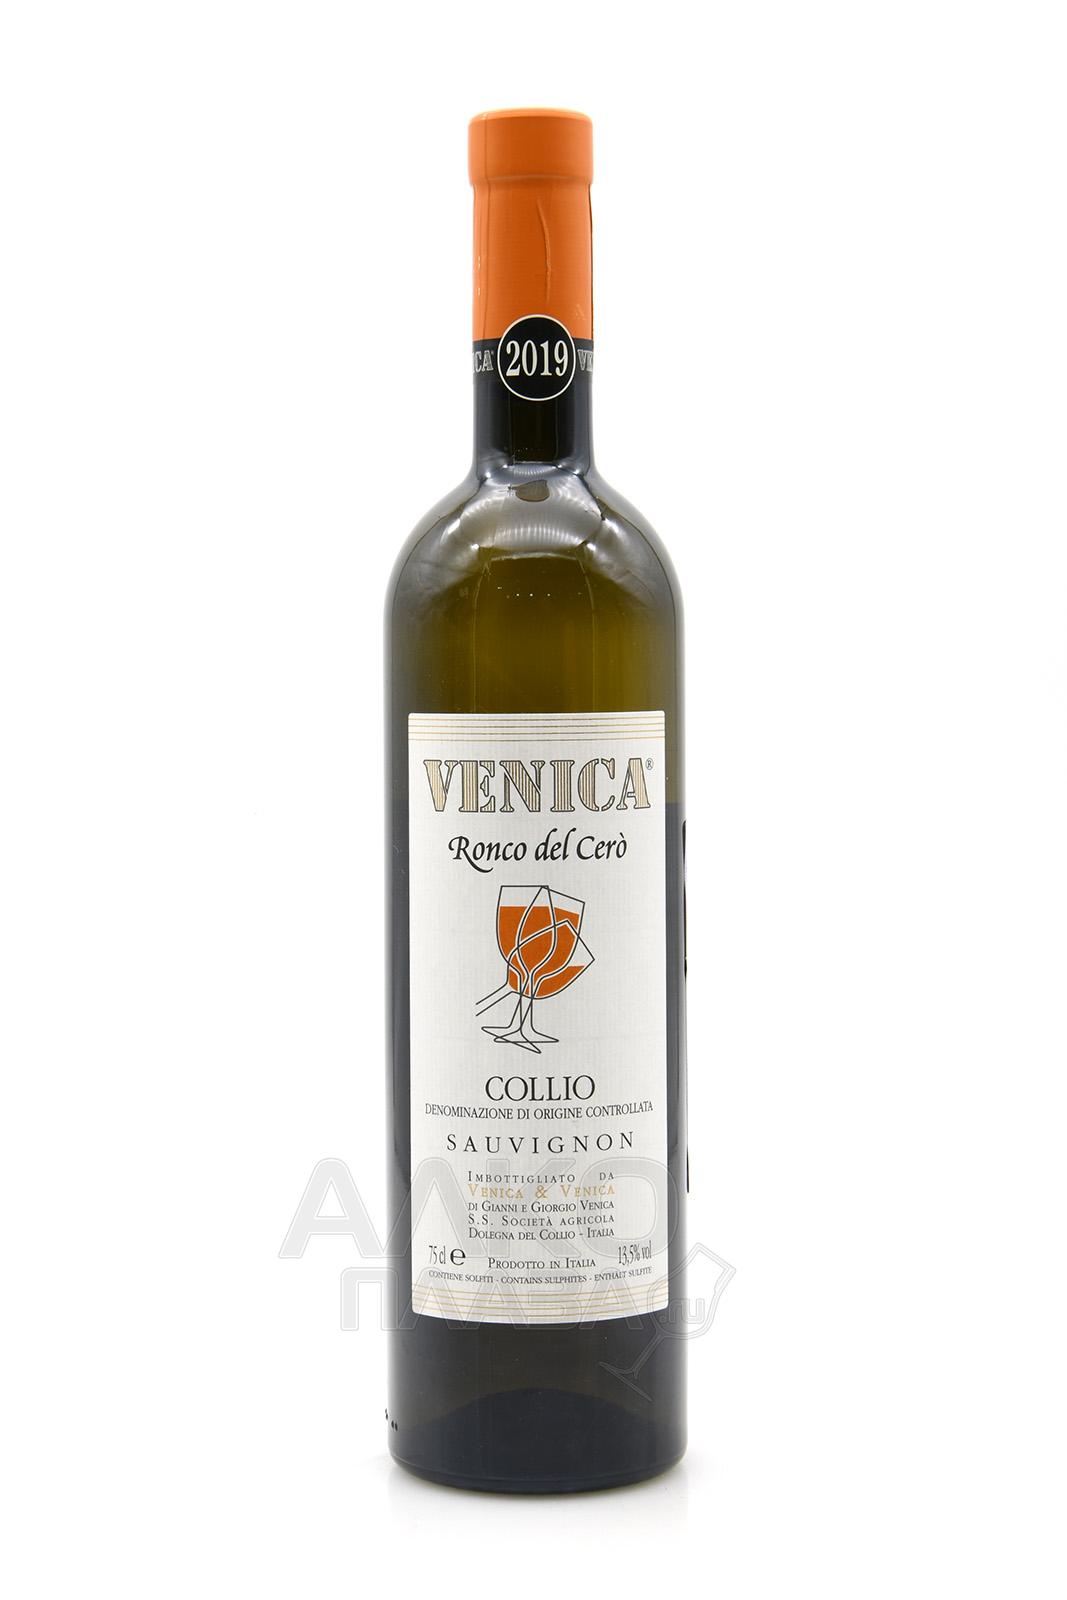 Venica Ronco del Cero Collio Sauvignon - вино Совиньон Коллио ДОК Ронко дель Черо 0.75 л белое сухое